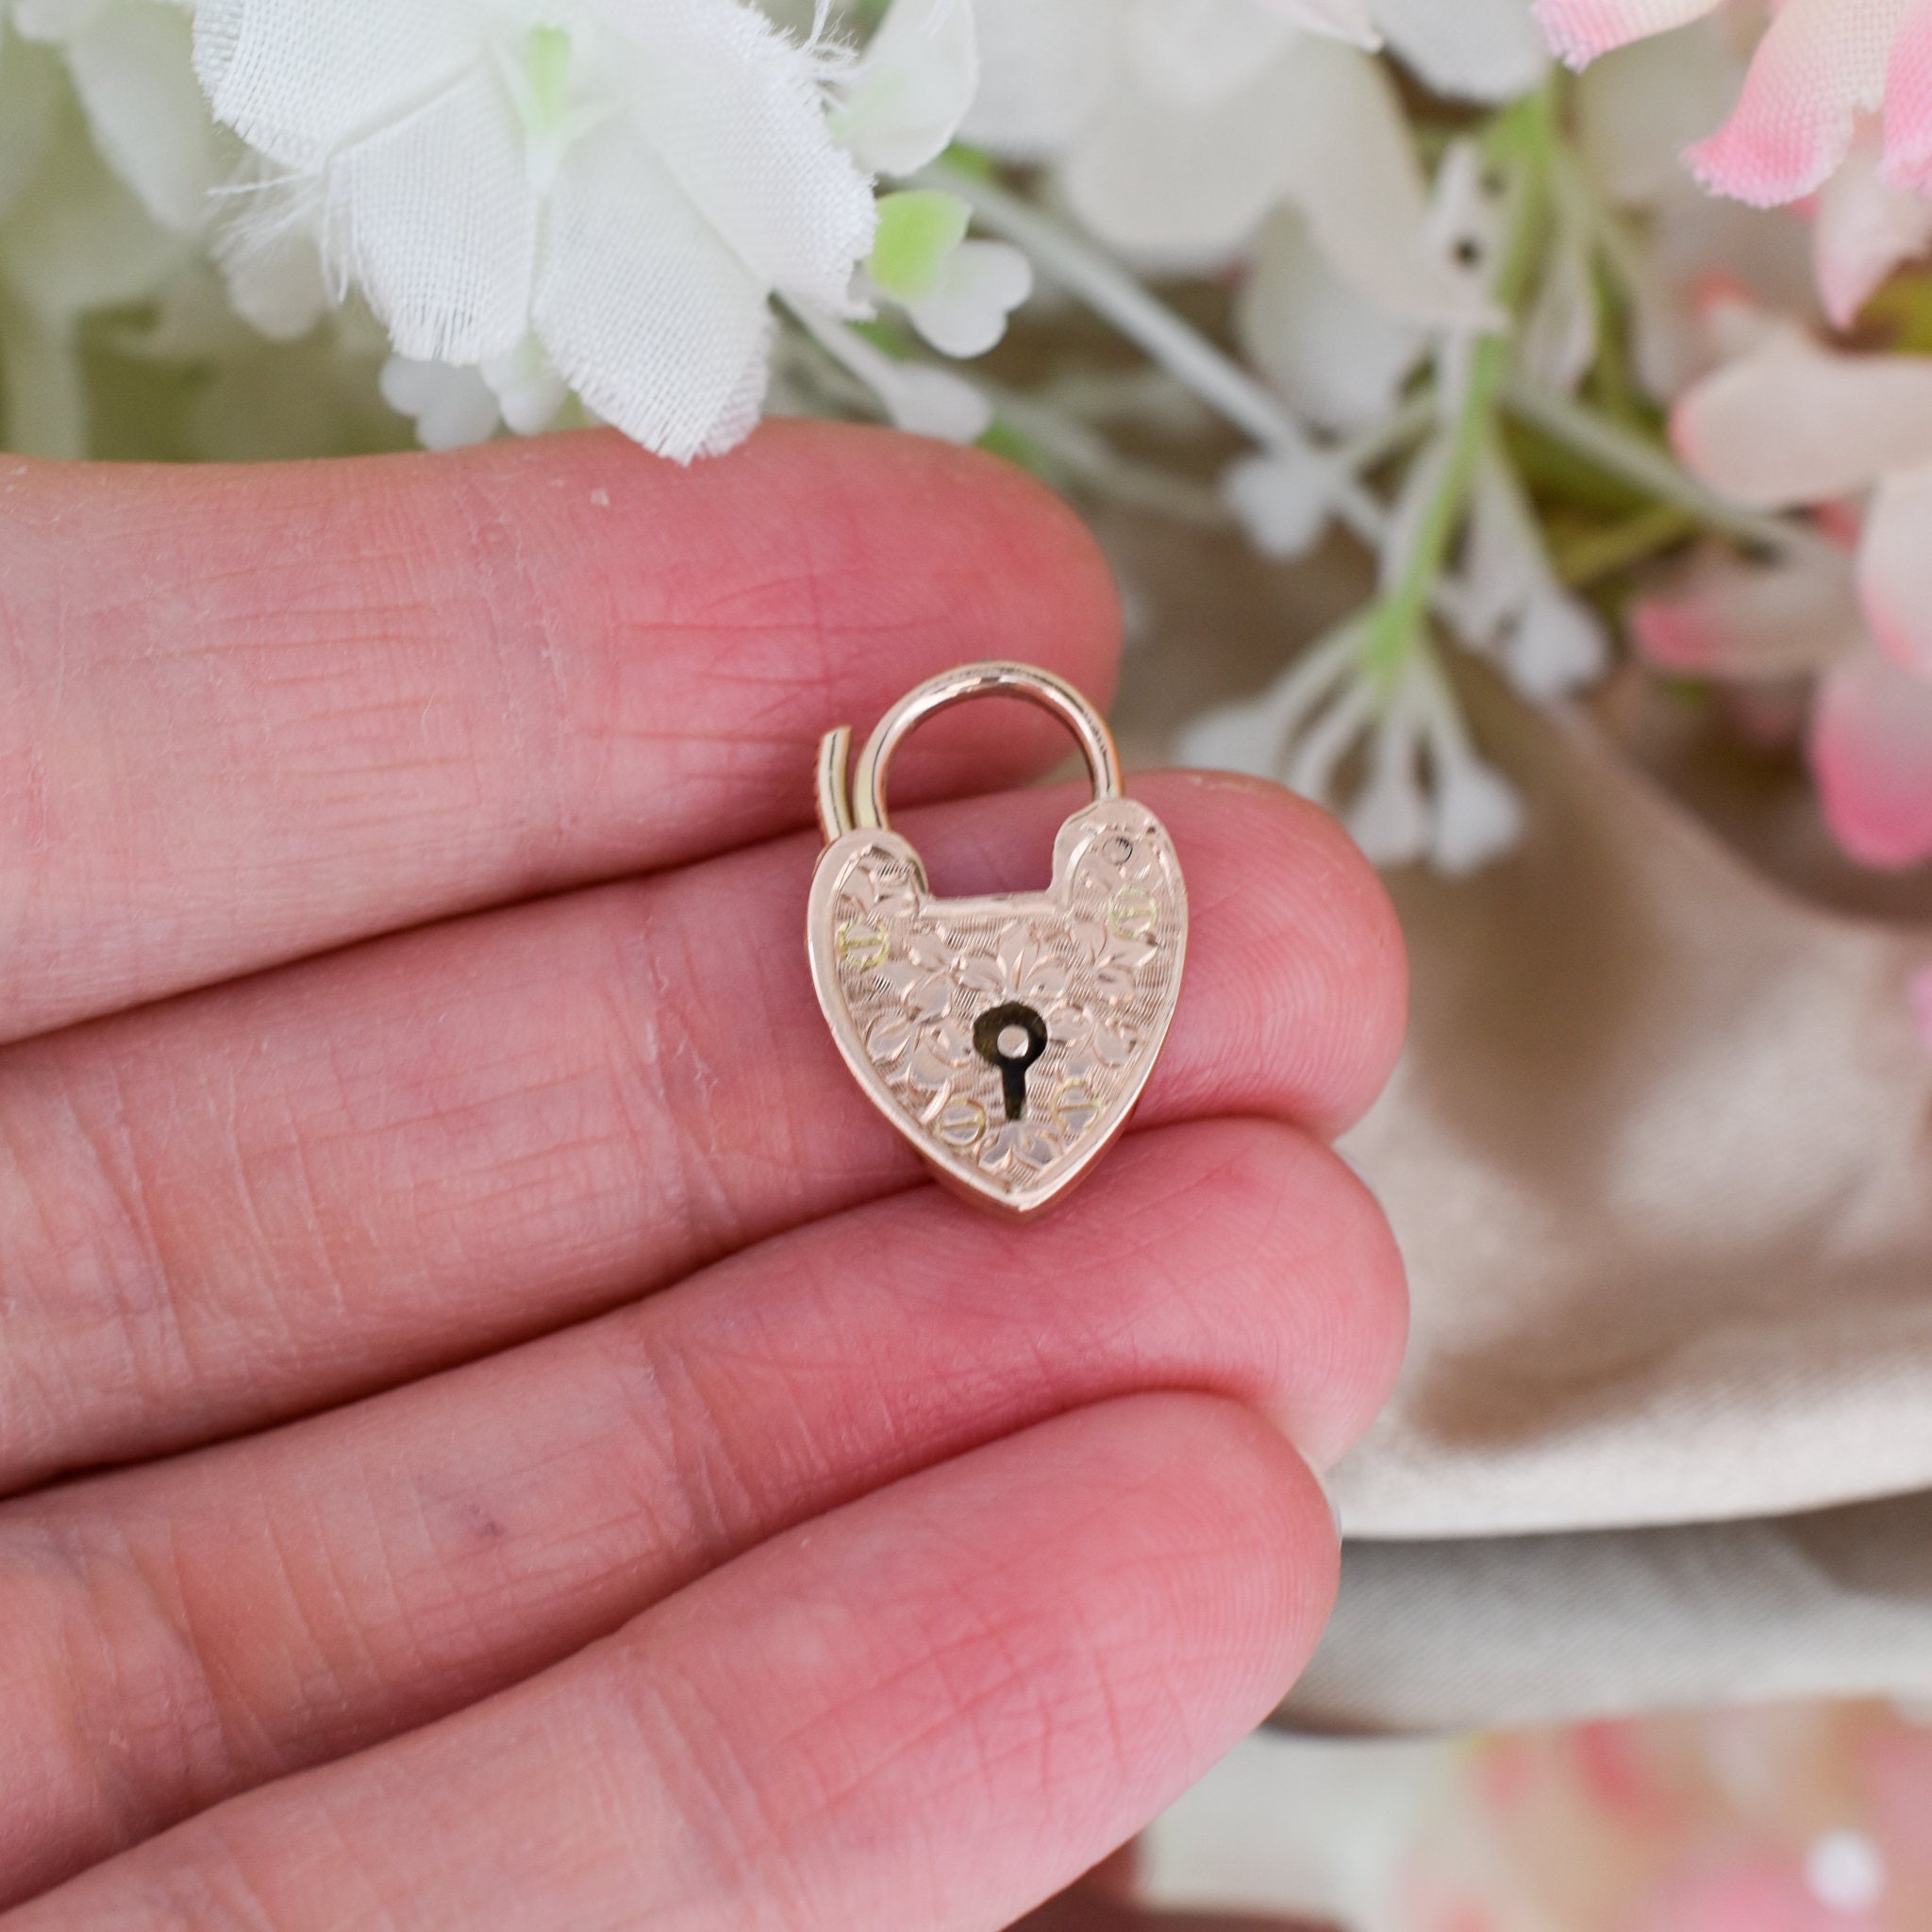 Engraved Heart Love Lock with Key - Travel bridge love locks for Honeymoon  Travel, Wedding Engagement Anniversary Gift for Couples